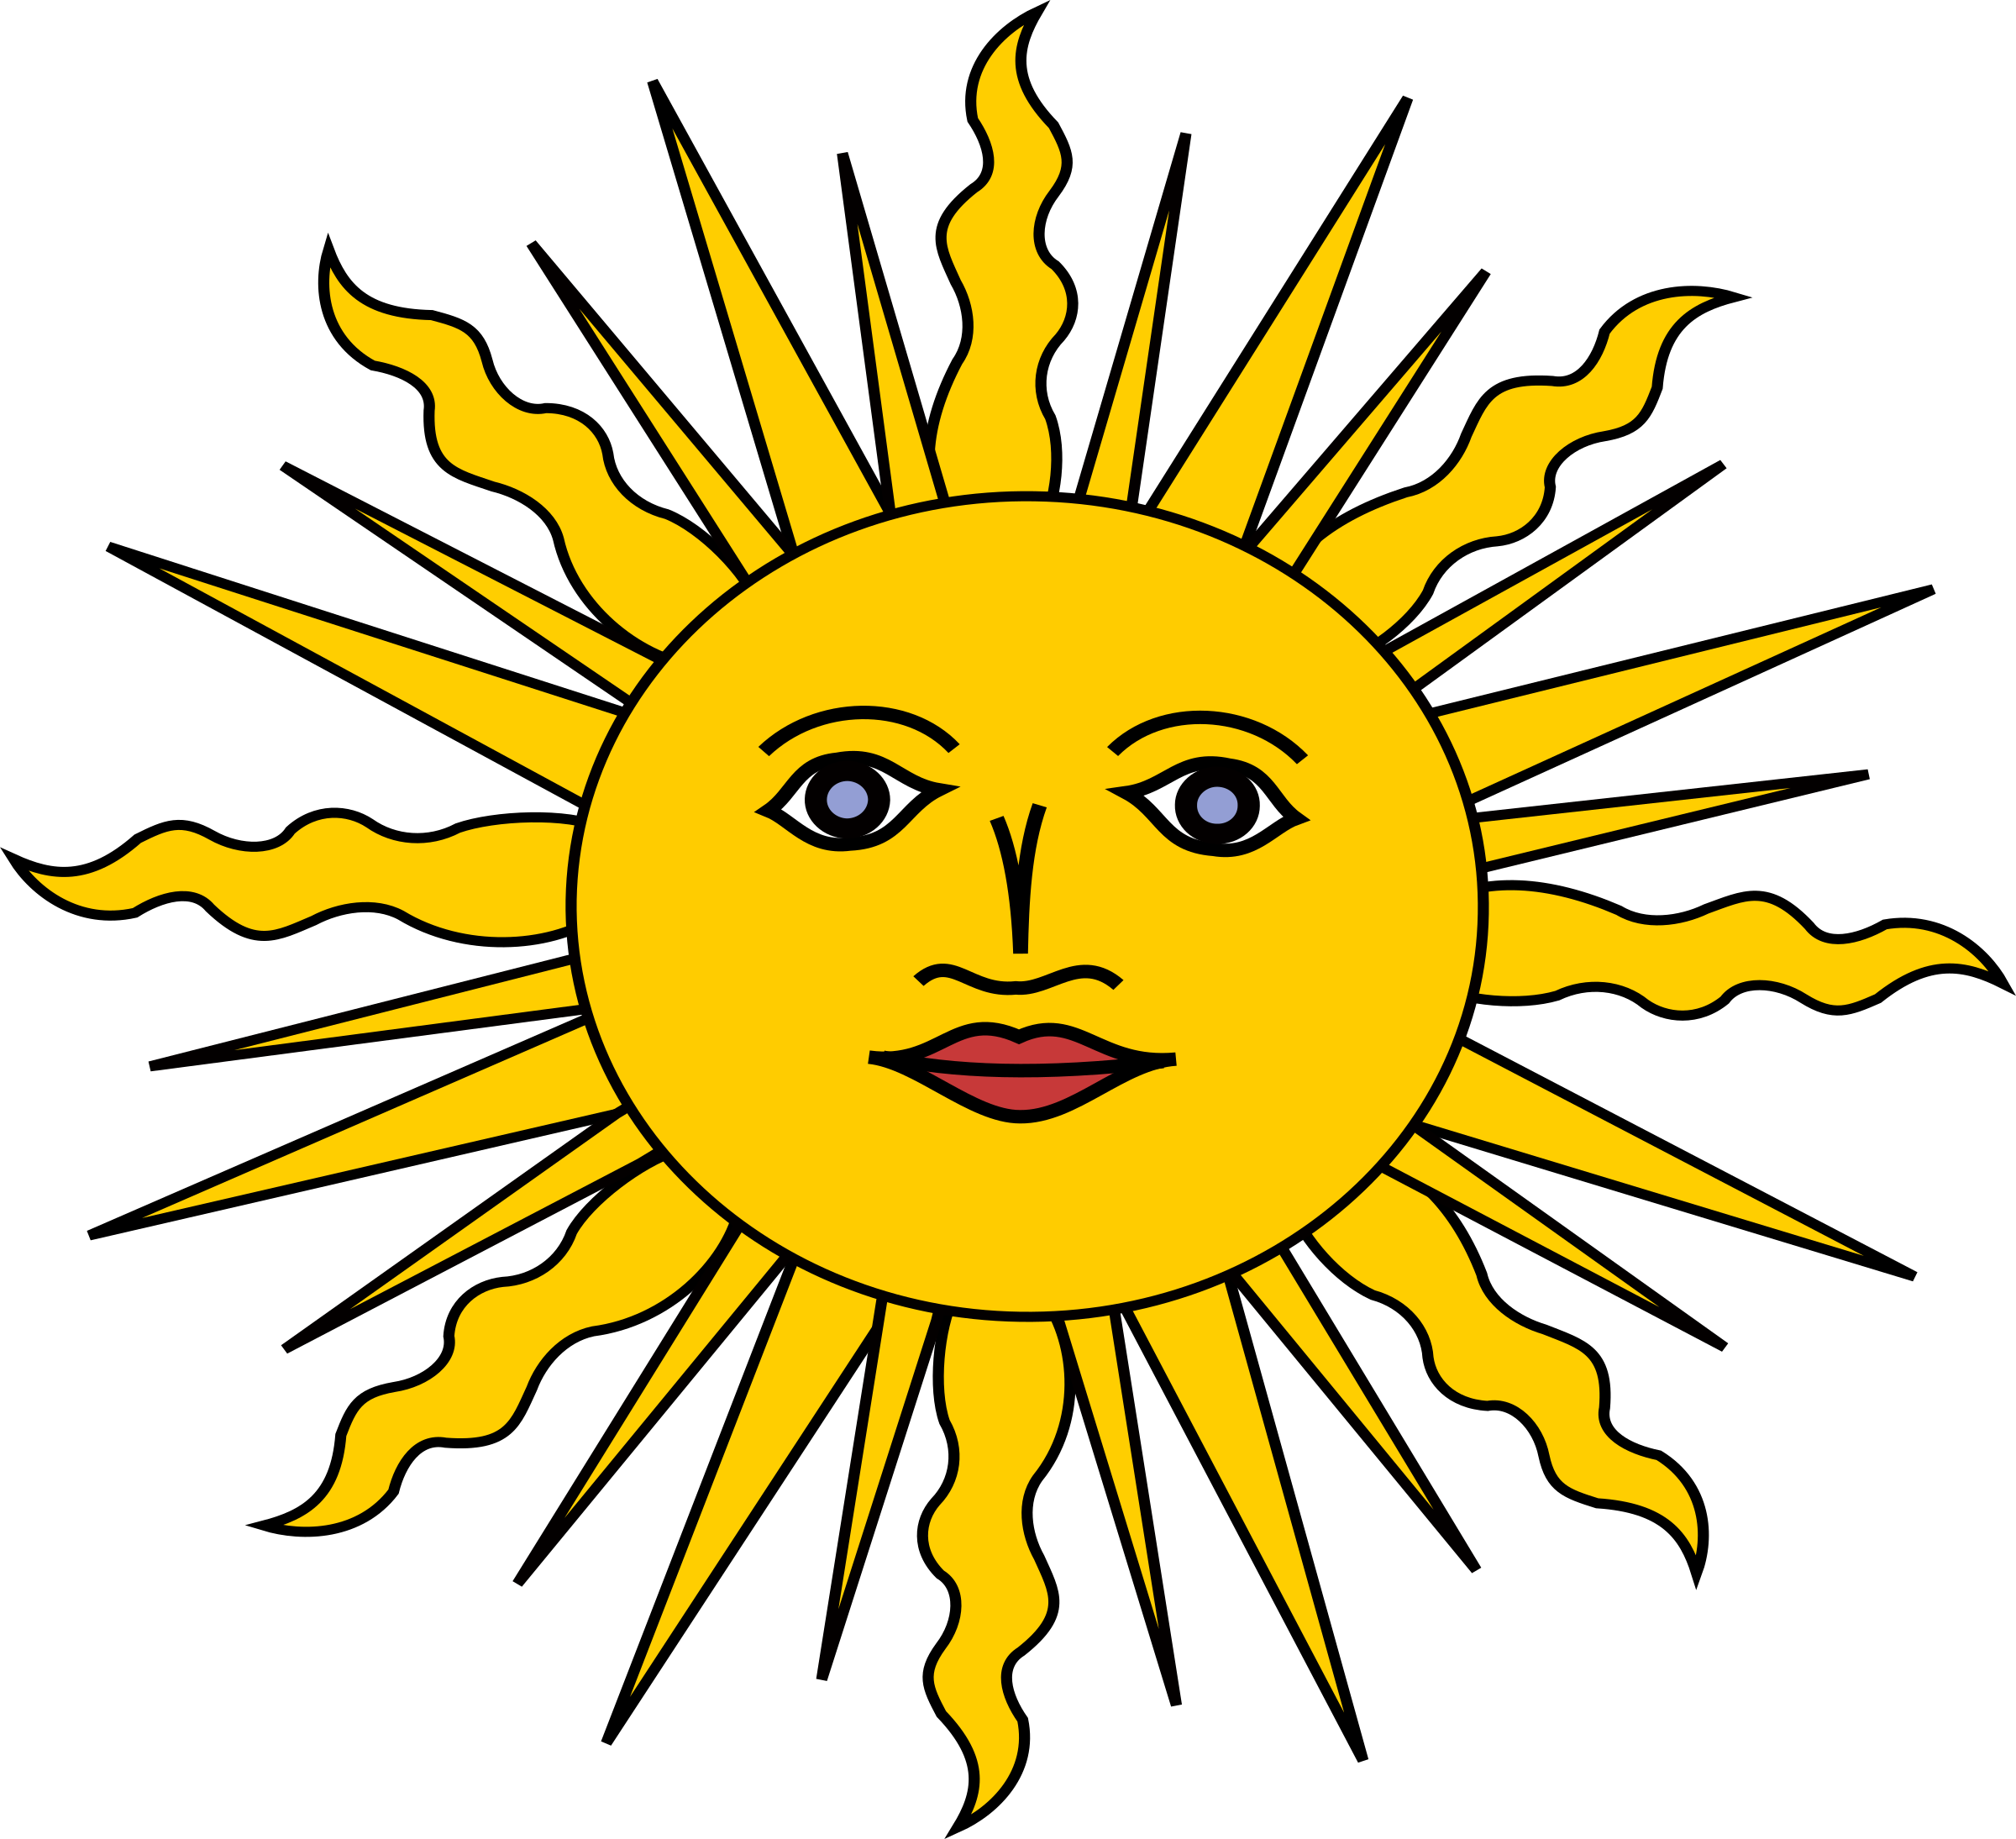 Солнце изображение рисунок. Солнце рисунок. Солнышко рисунок. Солнце нарисованное. Солнце риконок.